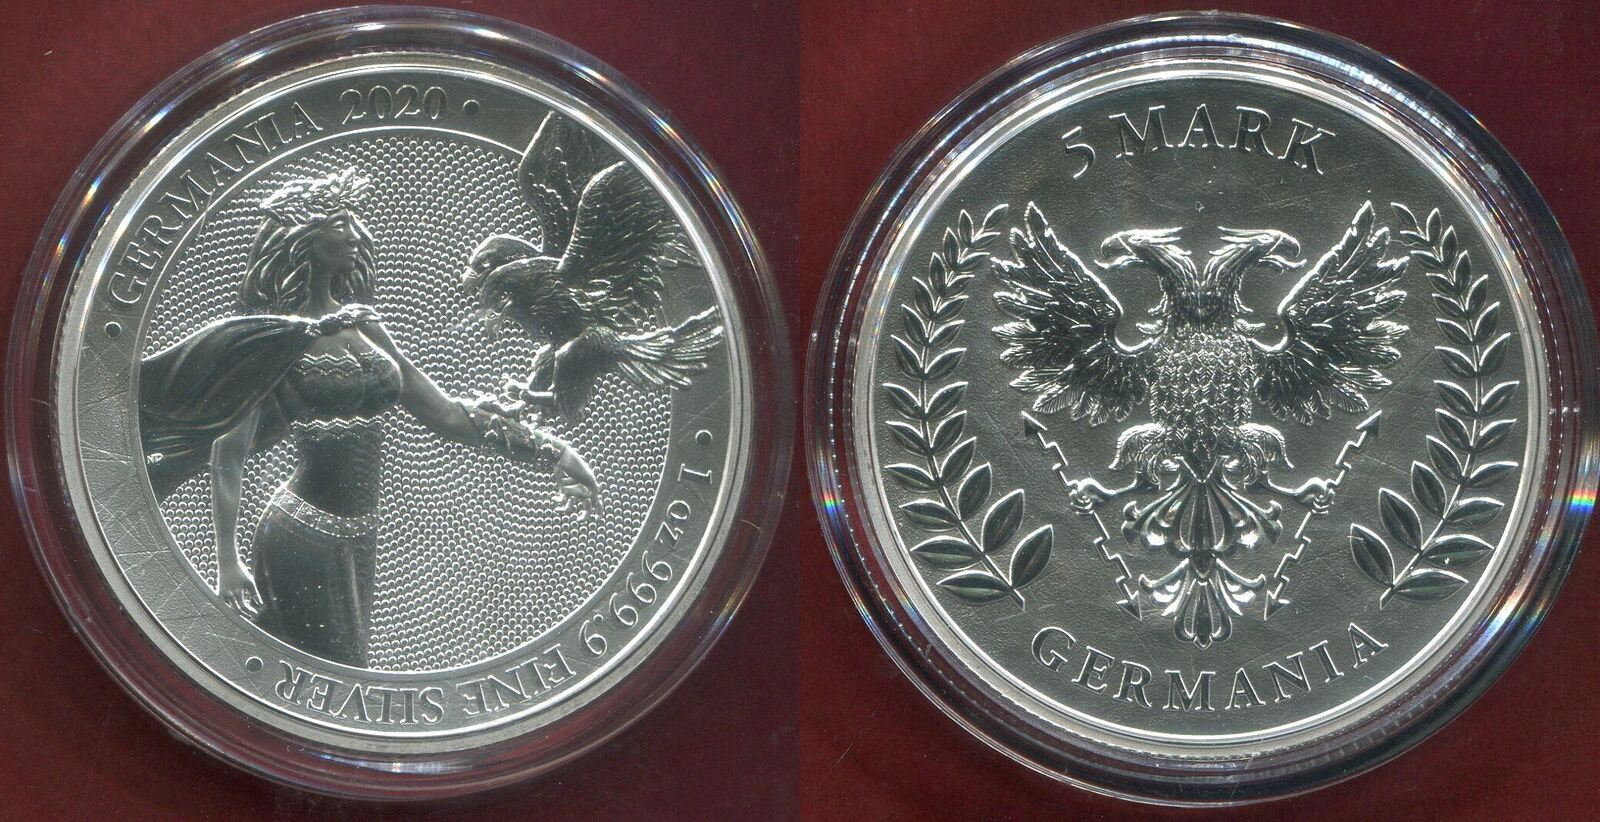 Germania Mint 5 Mark Unze 2020 Germania Eagle - Adler - 1 oz Silver BU